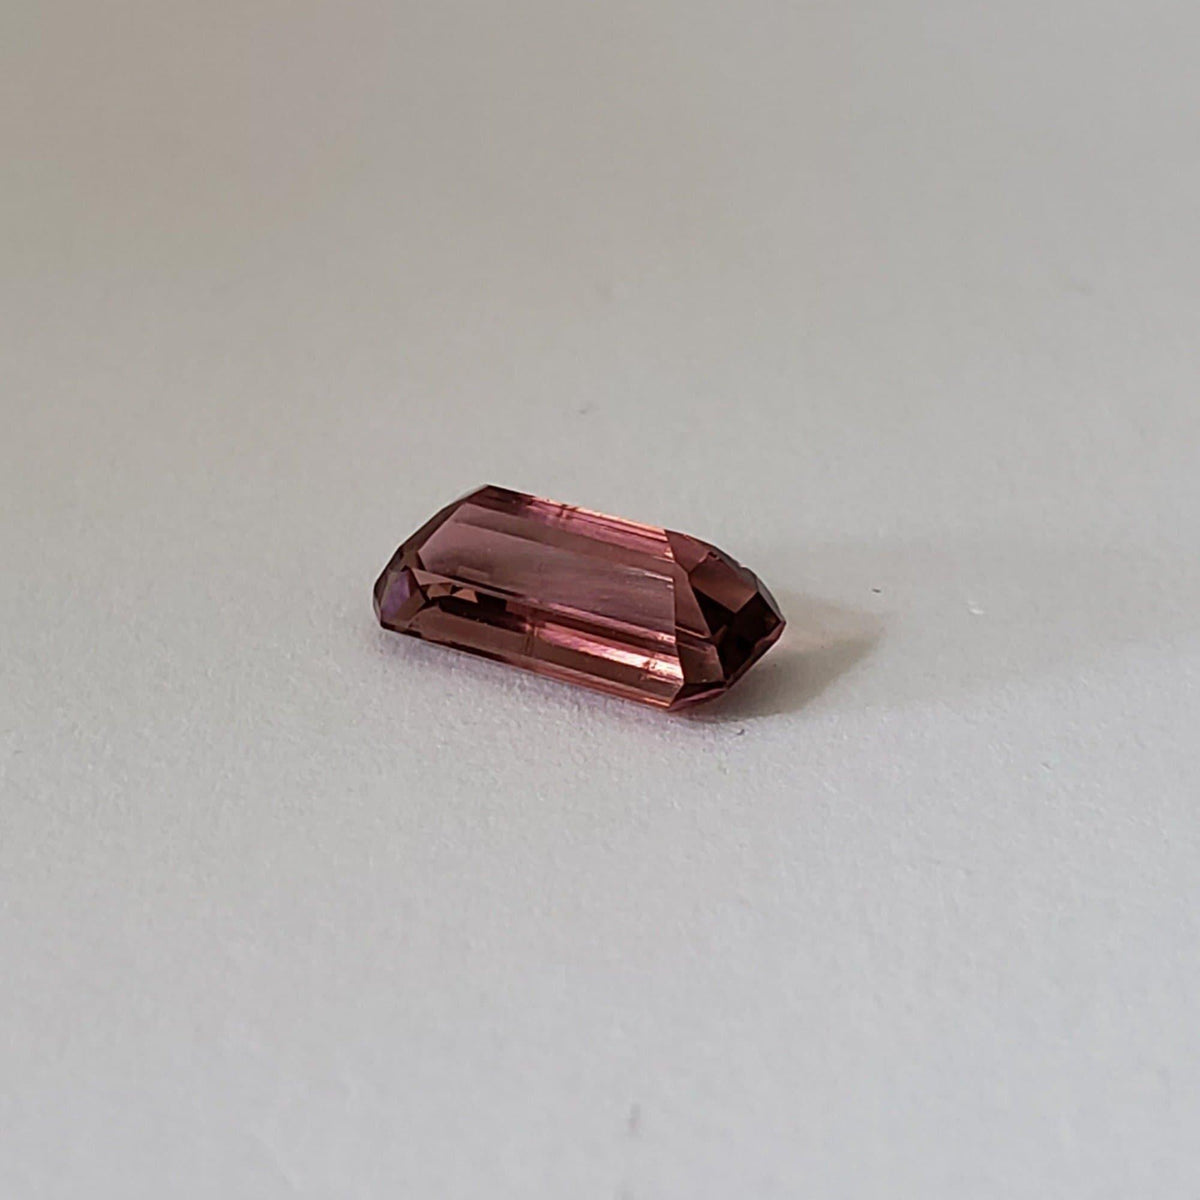 Tourmaline | Octagon Cut | Pink | 11x6mm 2.75ct